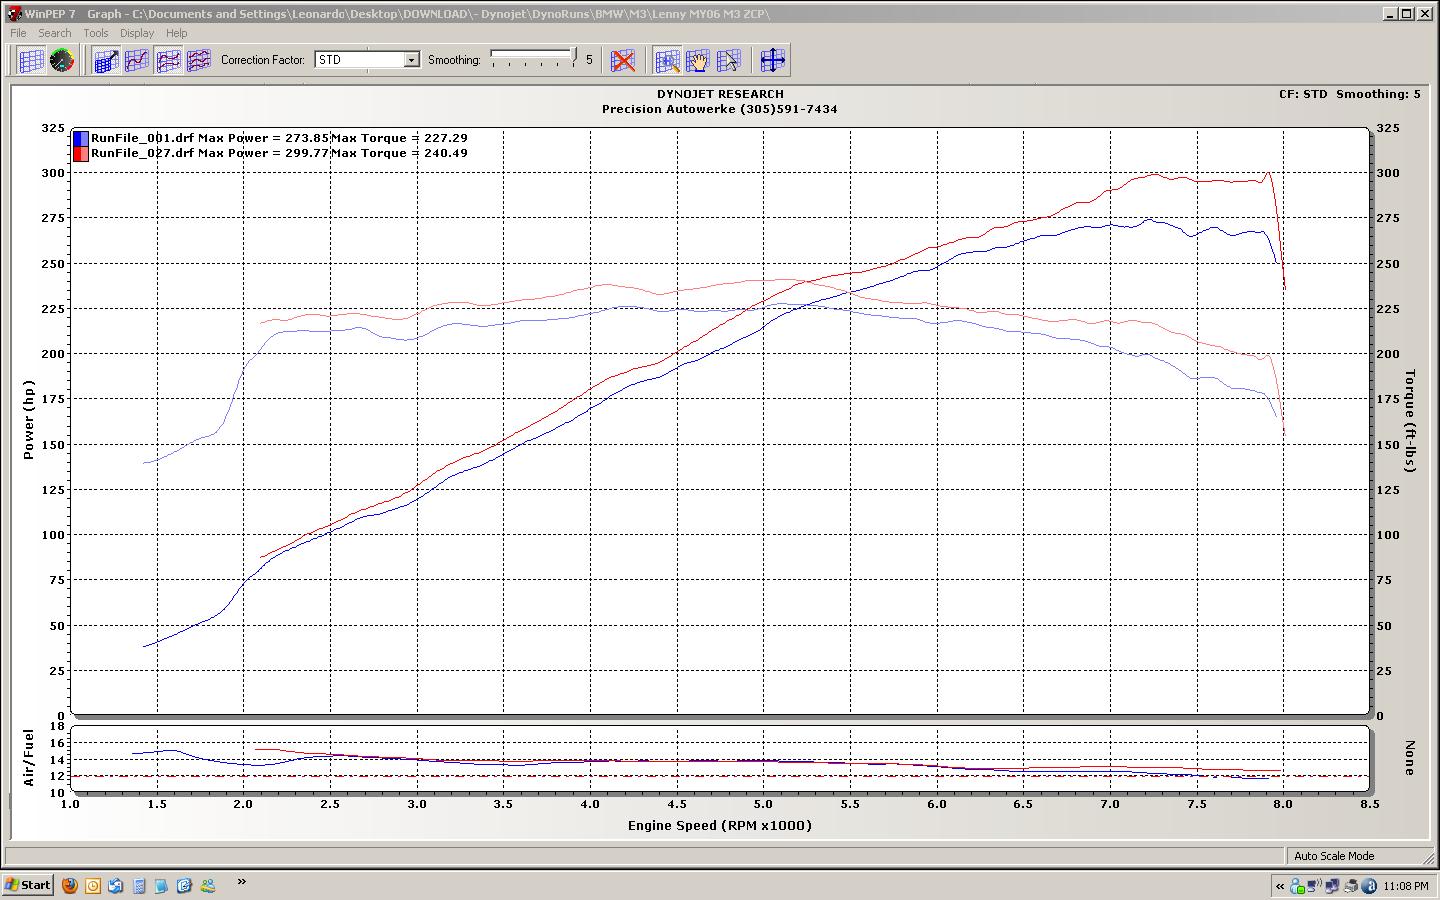 2006  BMW M3 ZCP 6spd - Precision Autowerke Dyno Graph